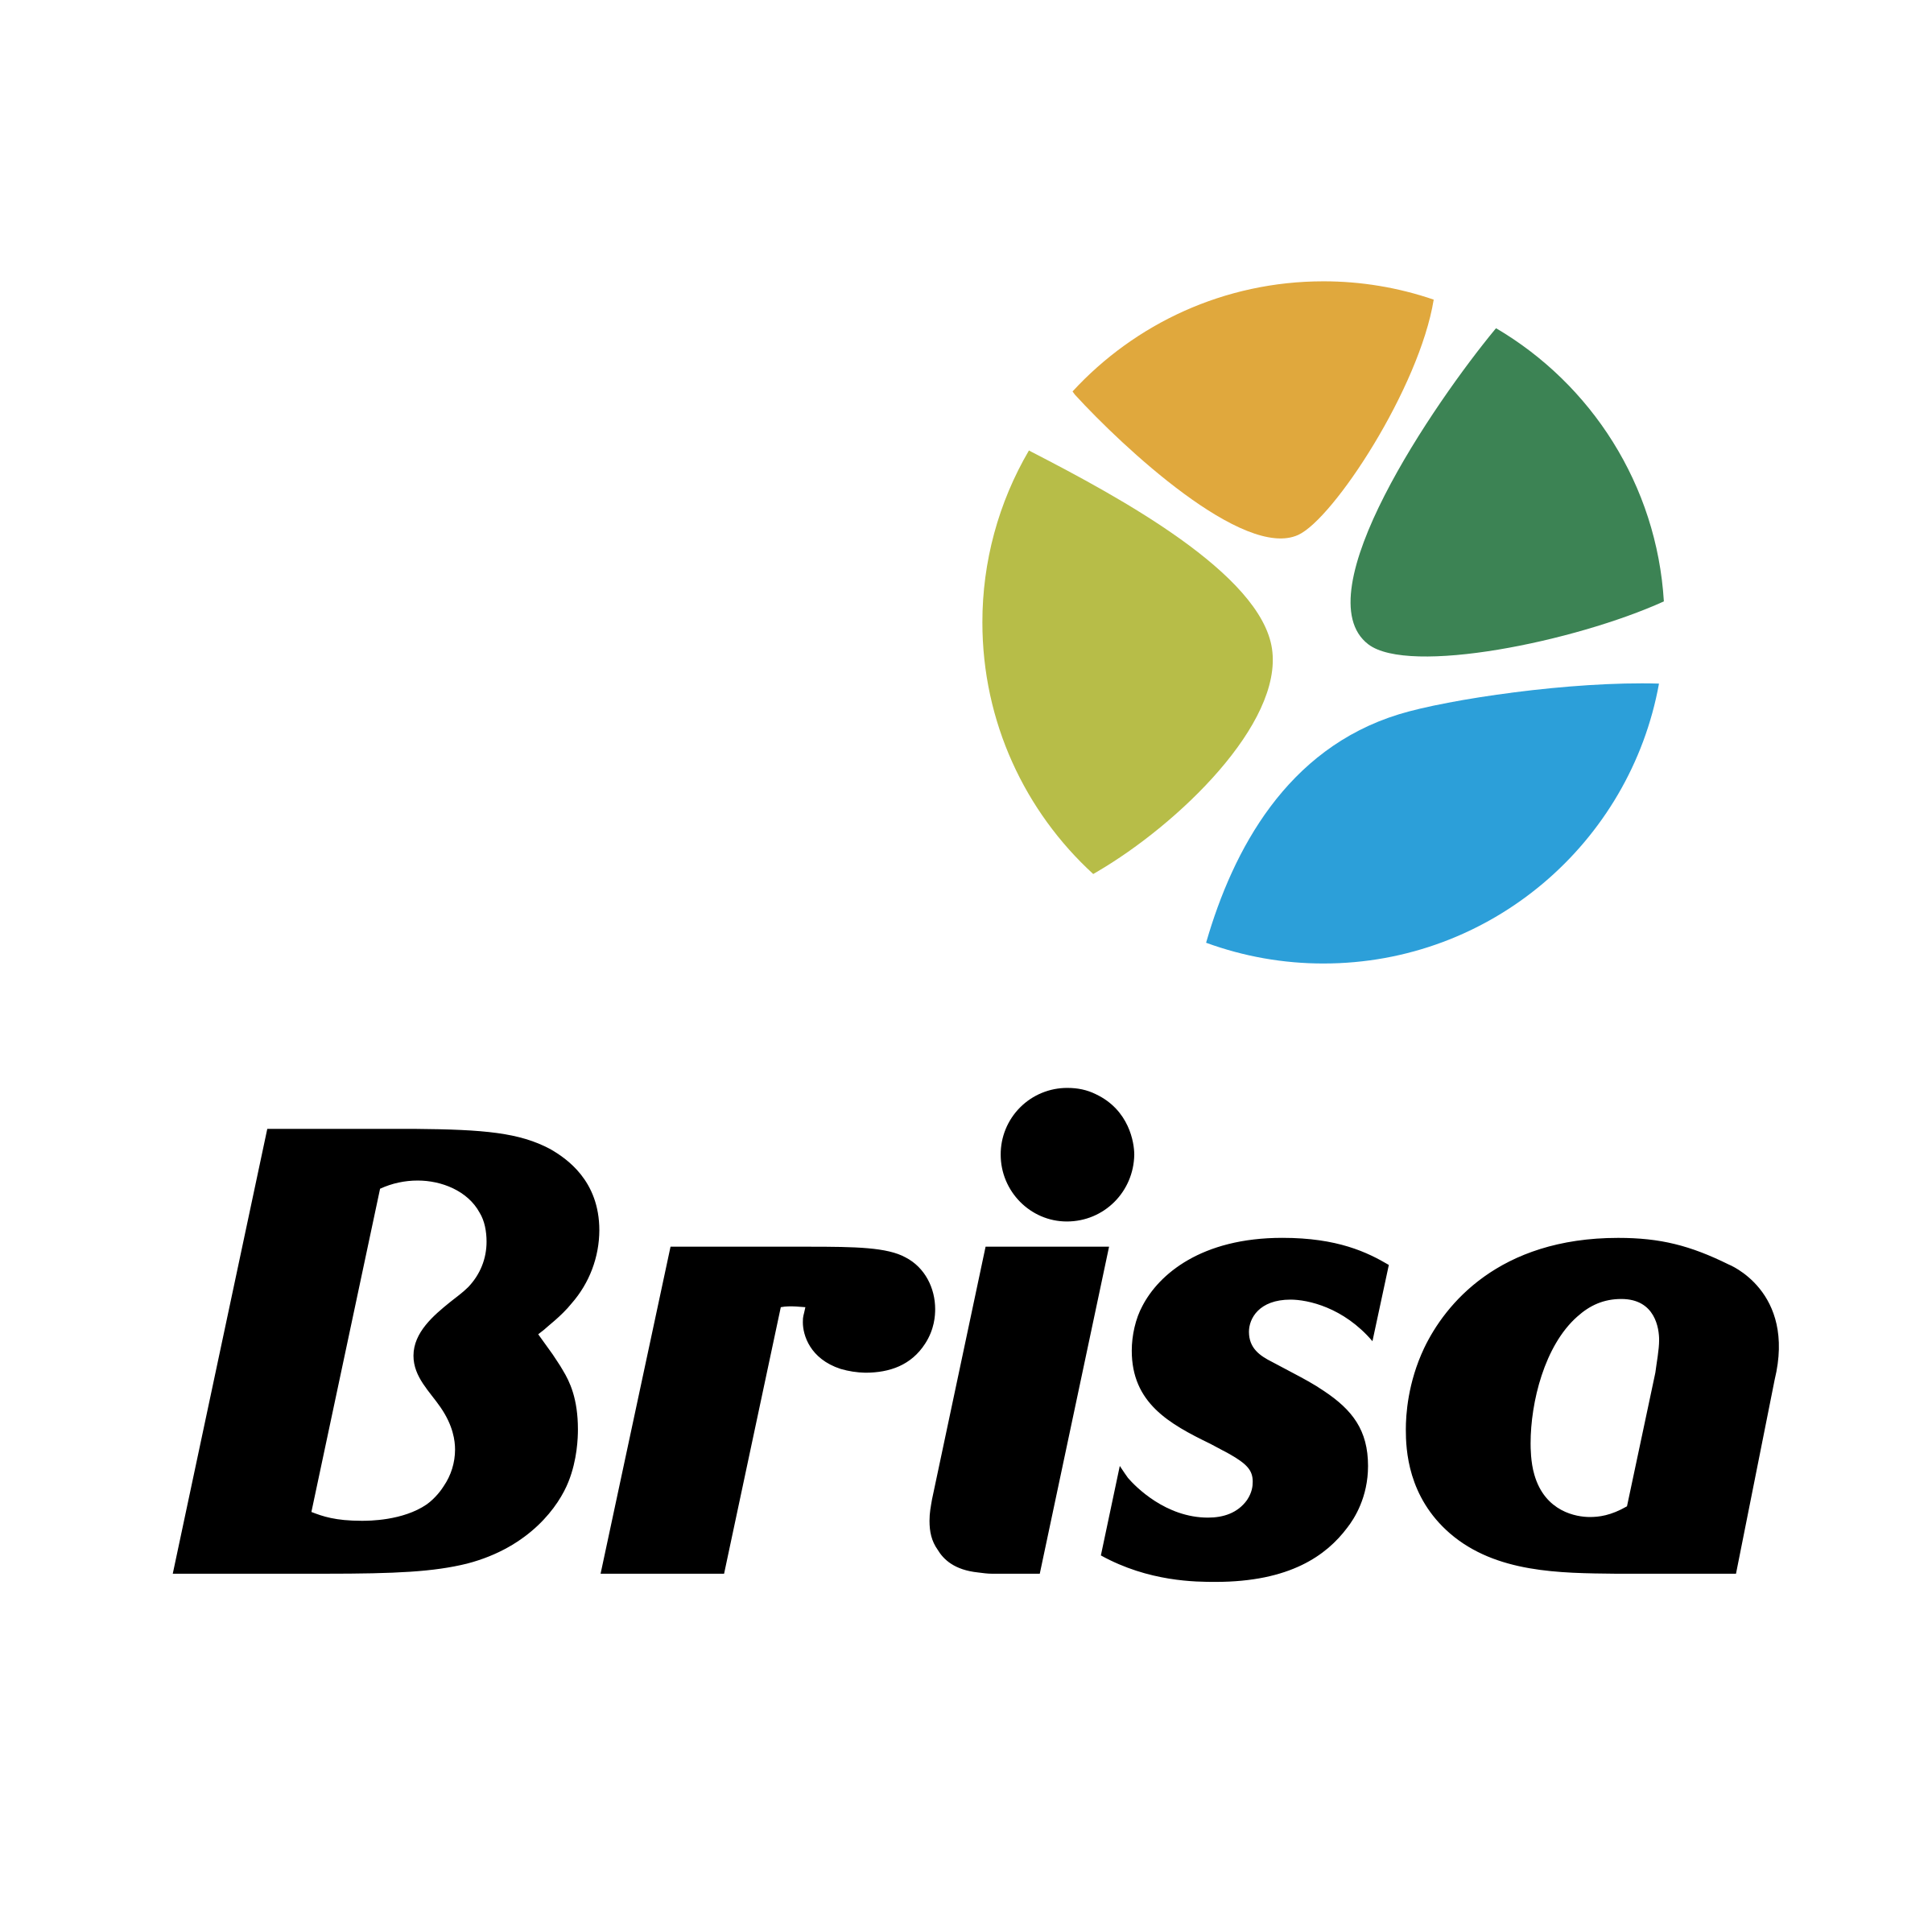 Brisa Brand Logo